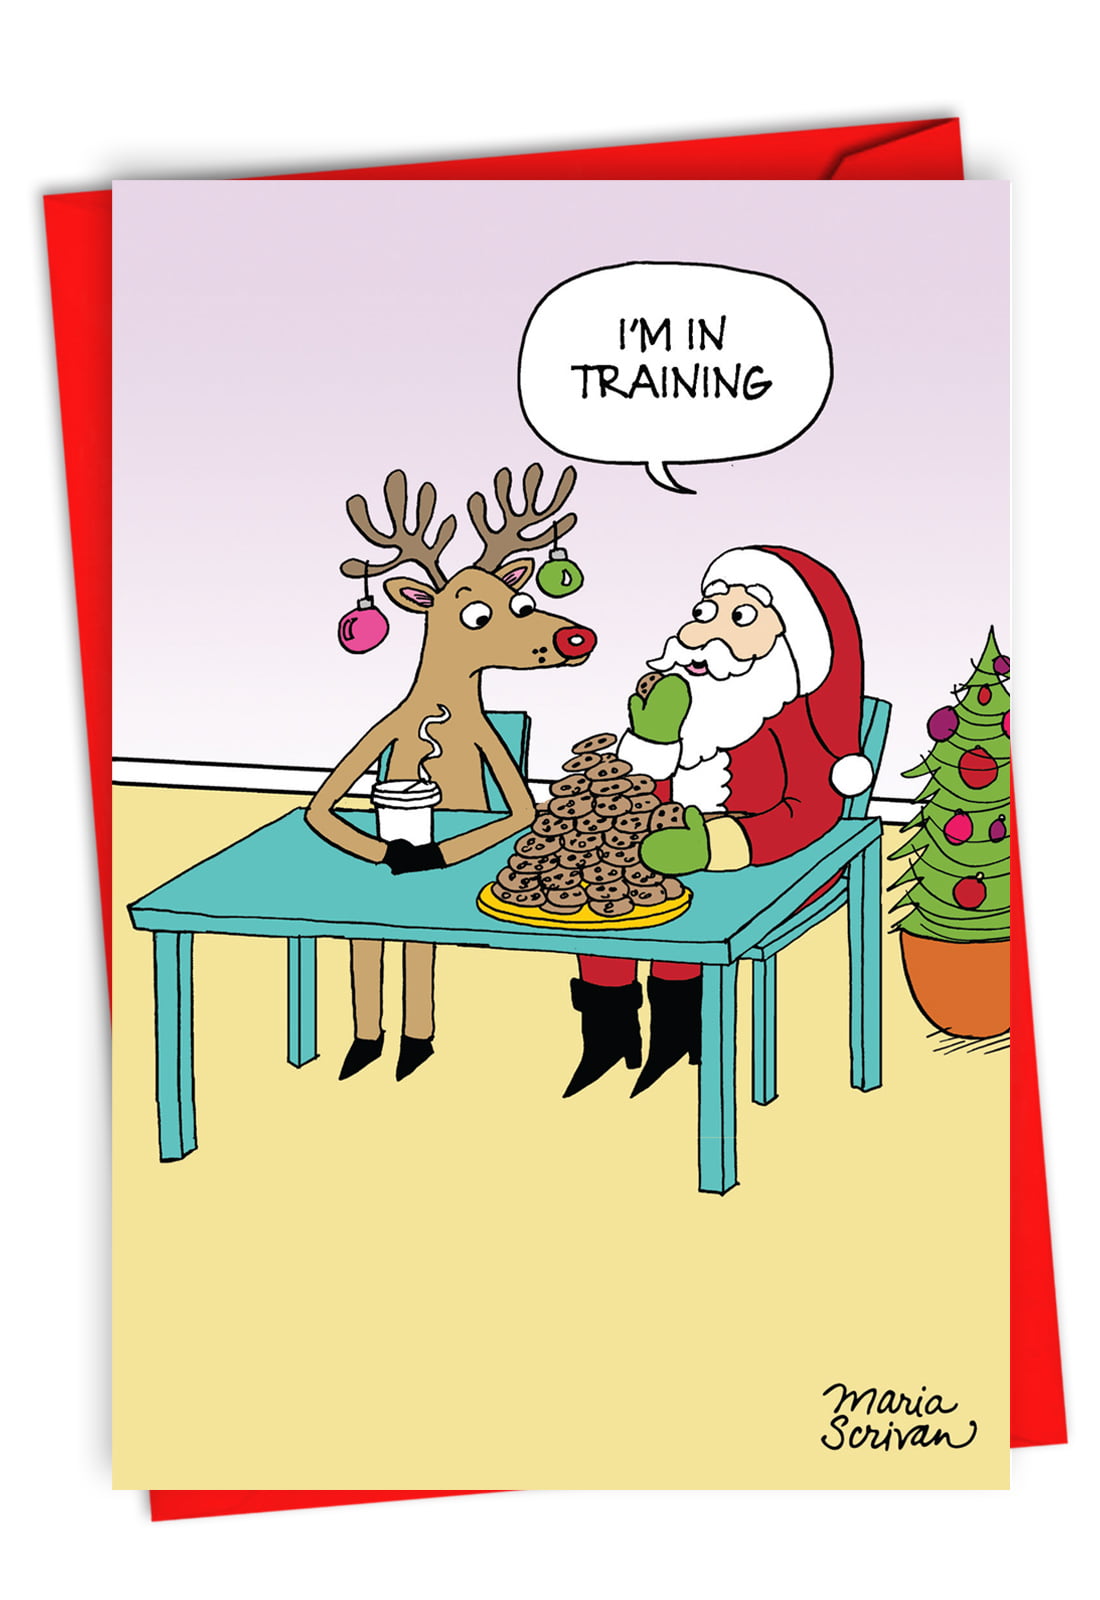 Merry Christmas Card Cartoon Funny Santa Claus & Reindeer, Holiday